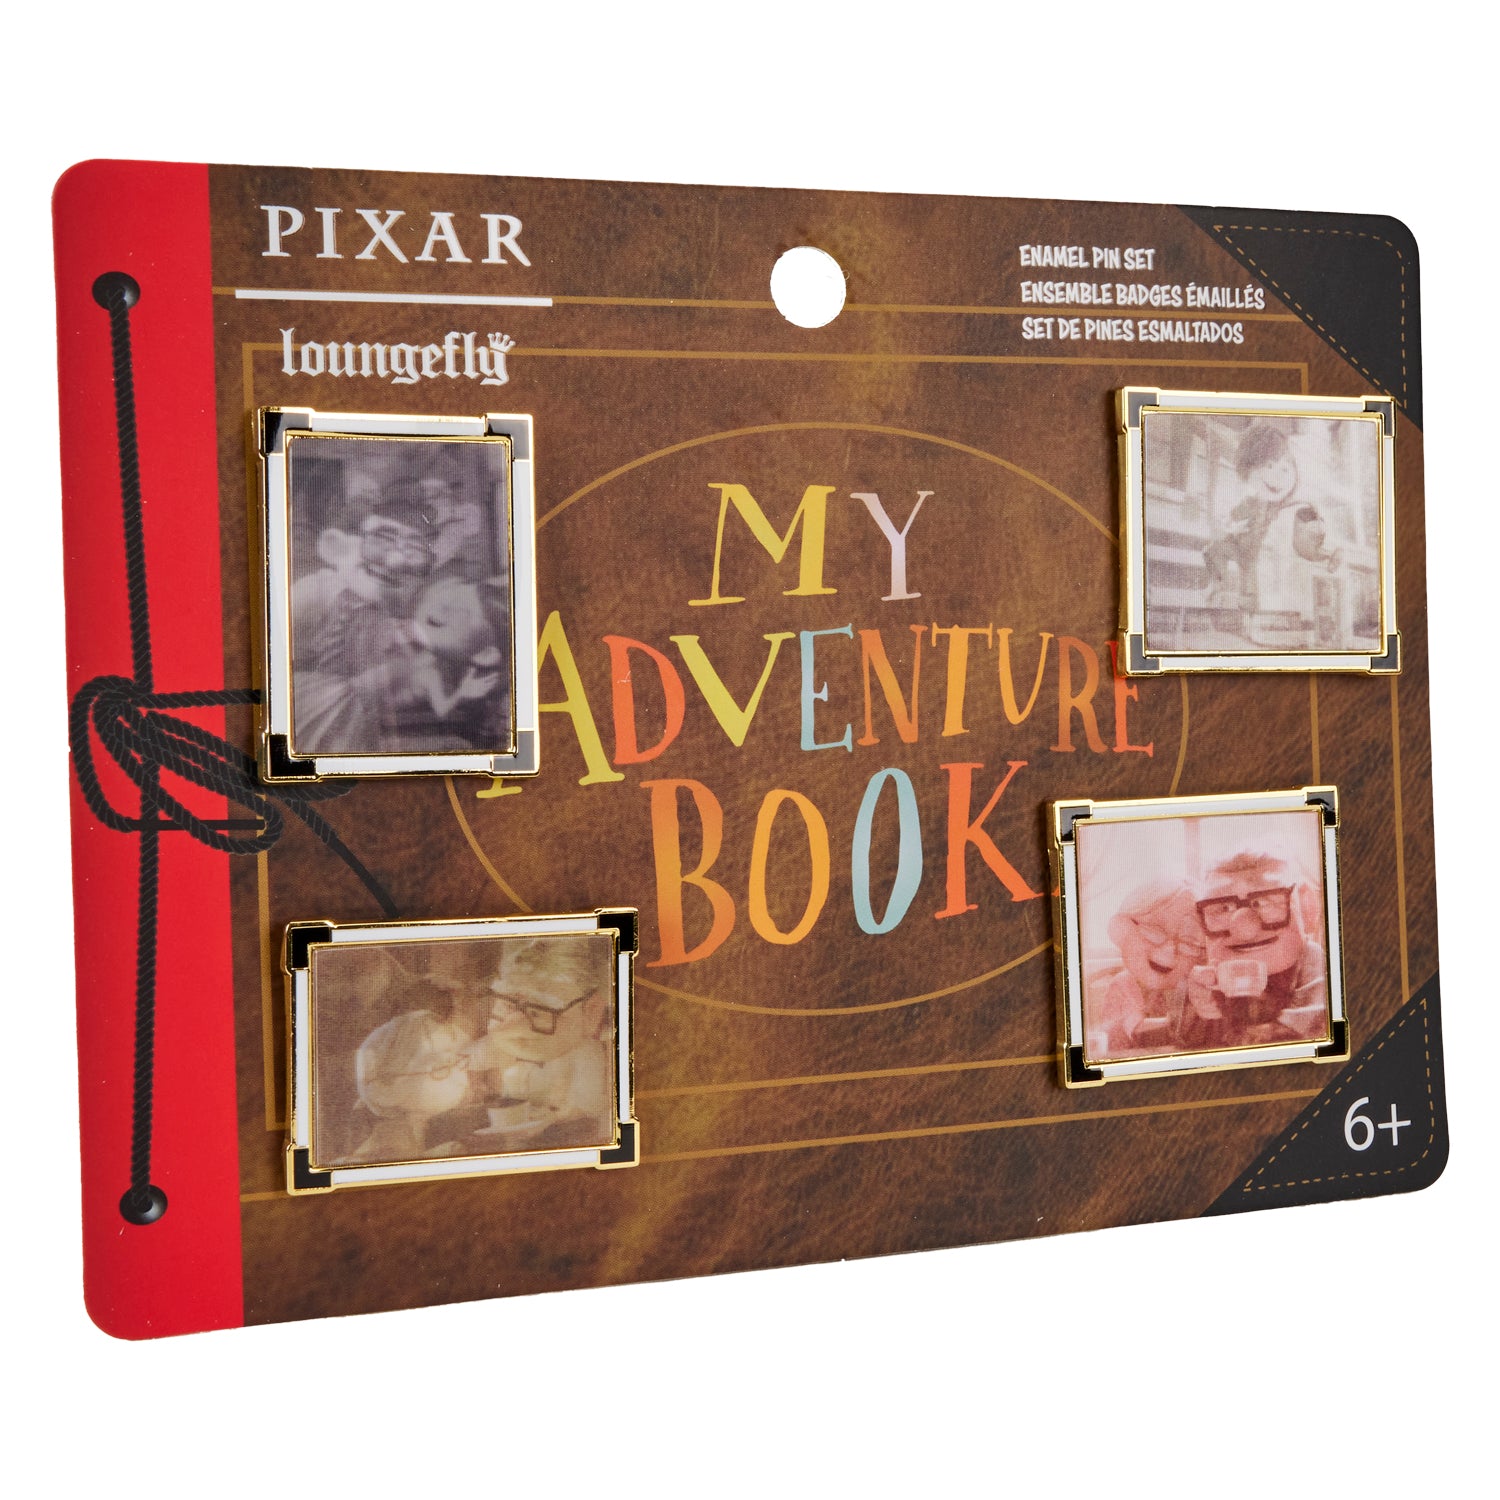 Loungefly Pixar Up 15th Anniversary Adventure Book 4pc Pin Set